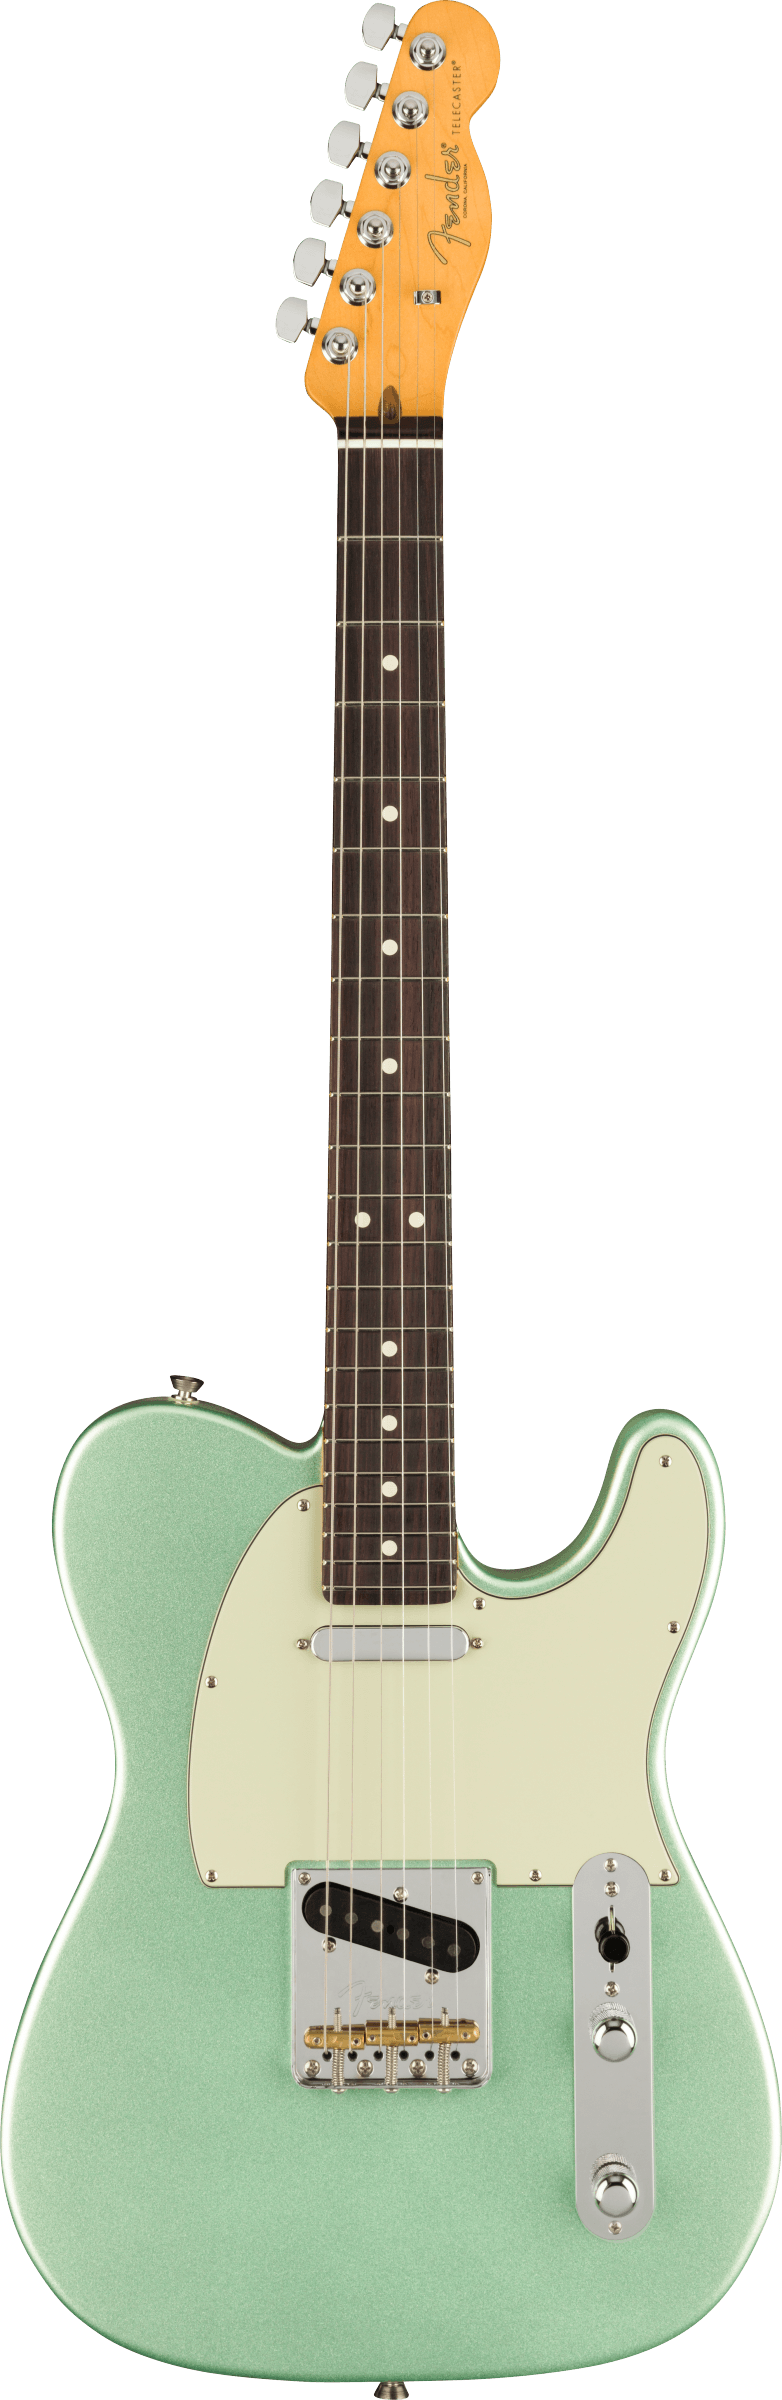 Fender Telecaster electric guitar in Mystic Surf Green Tone Shop Guitars DFW